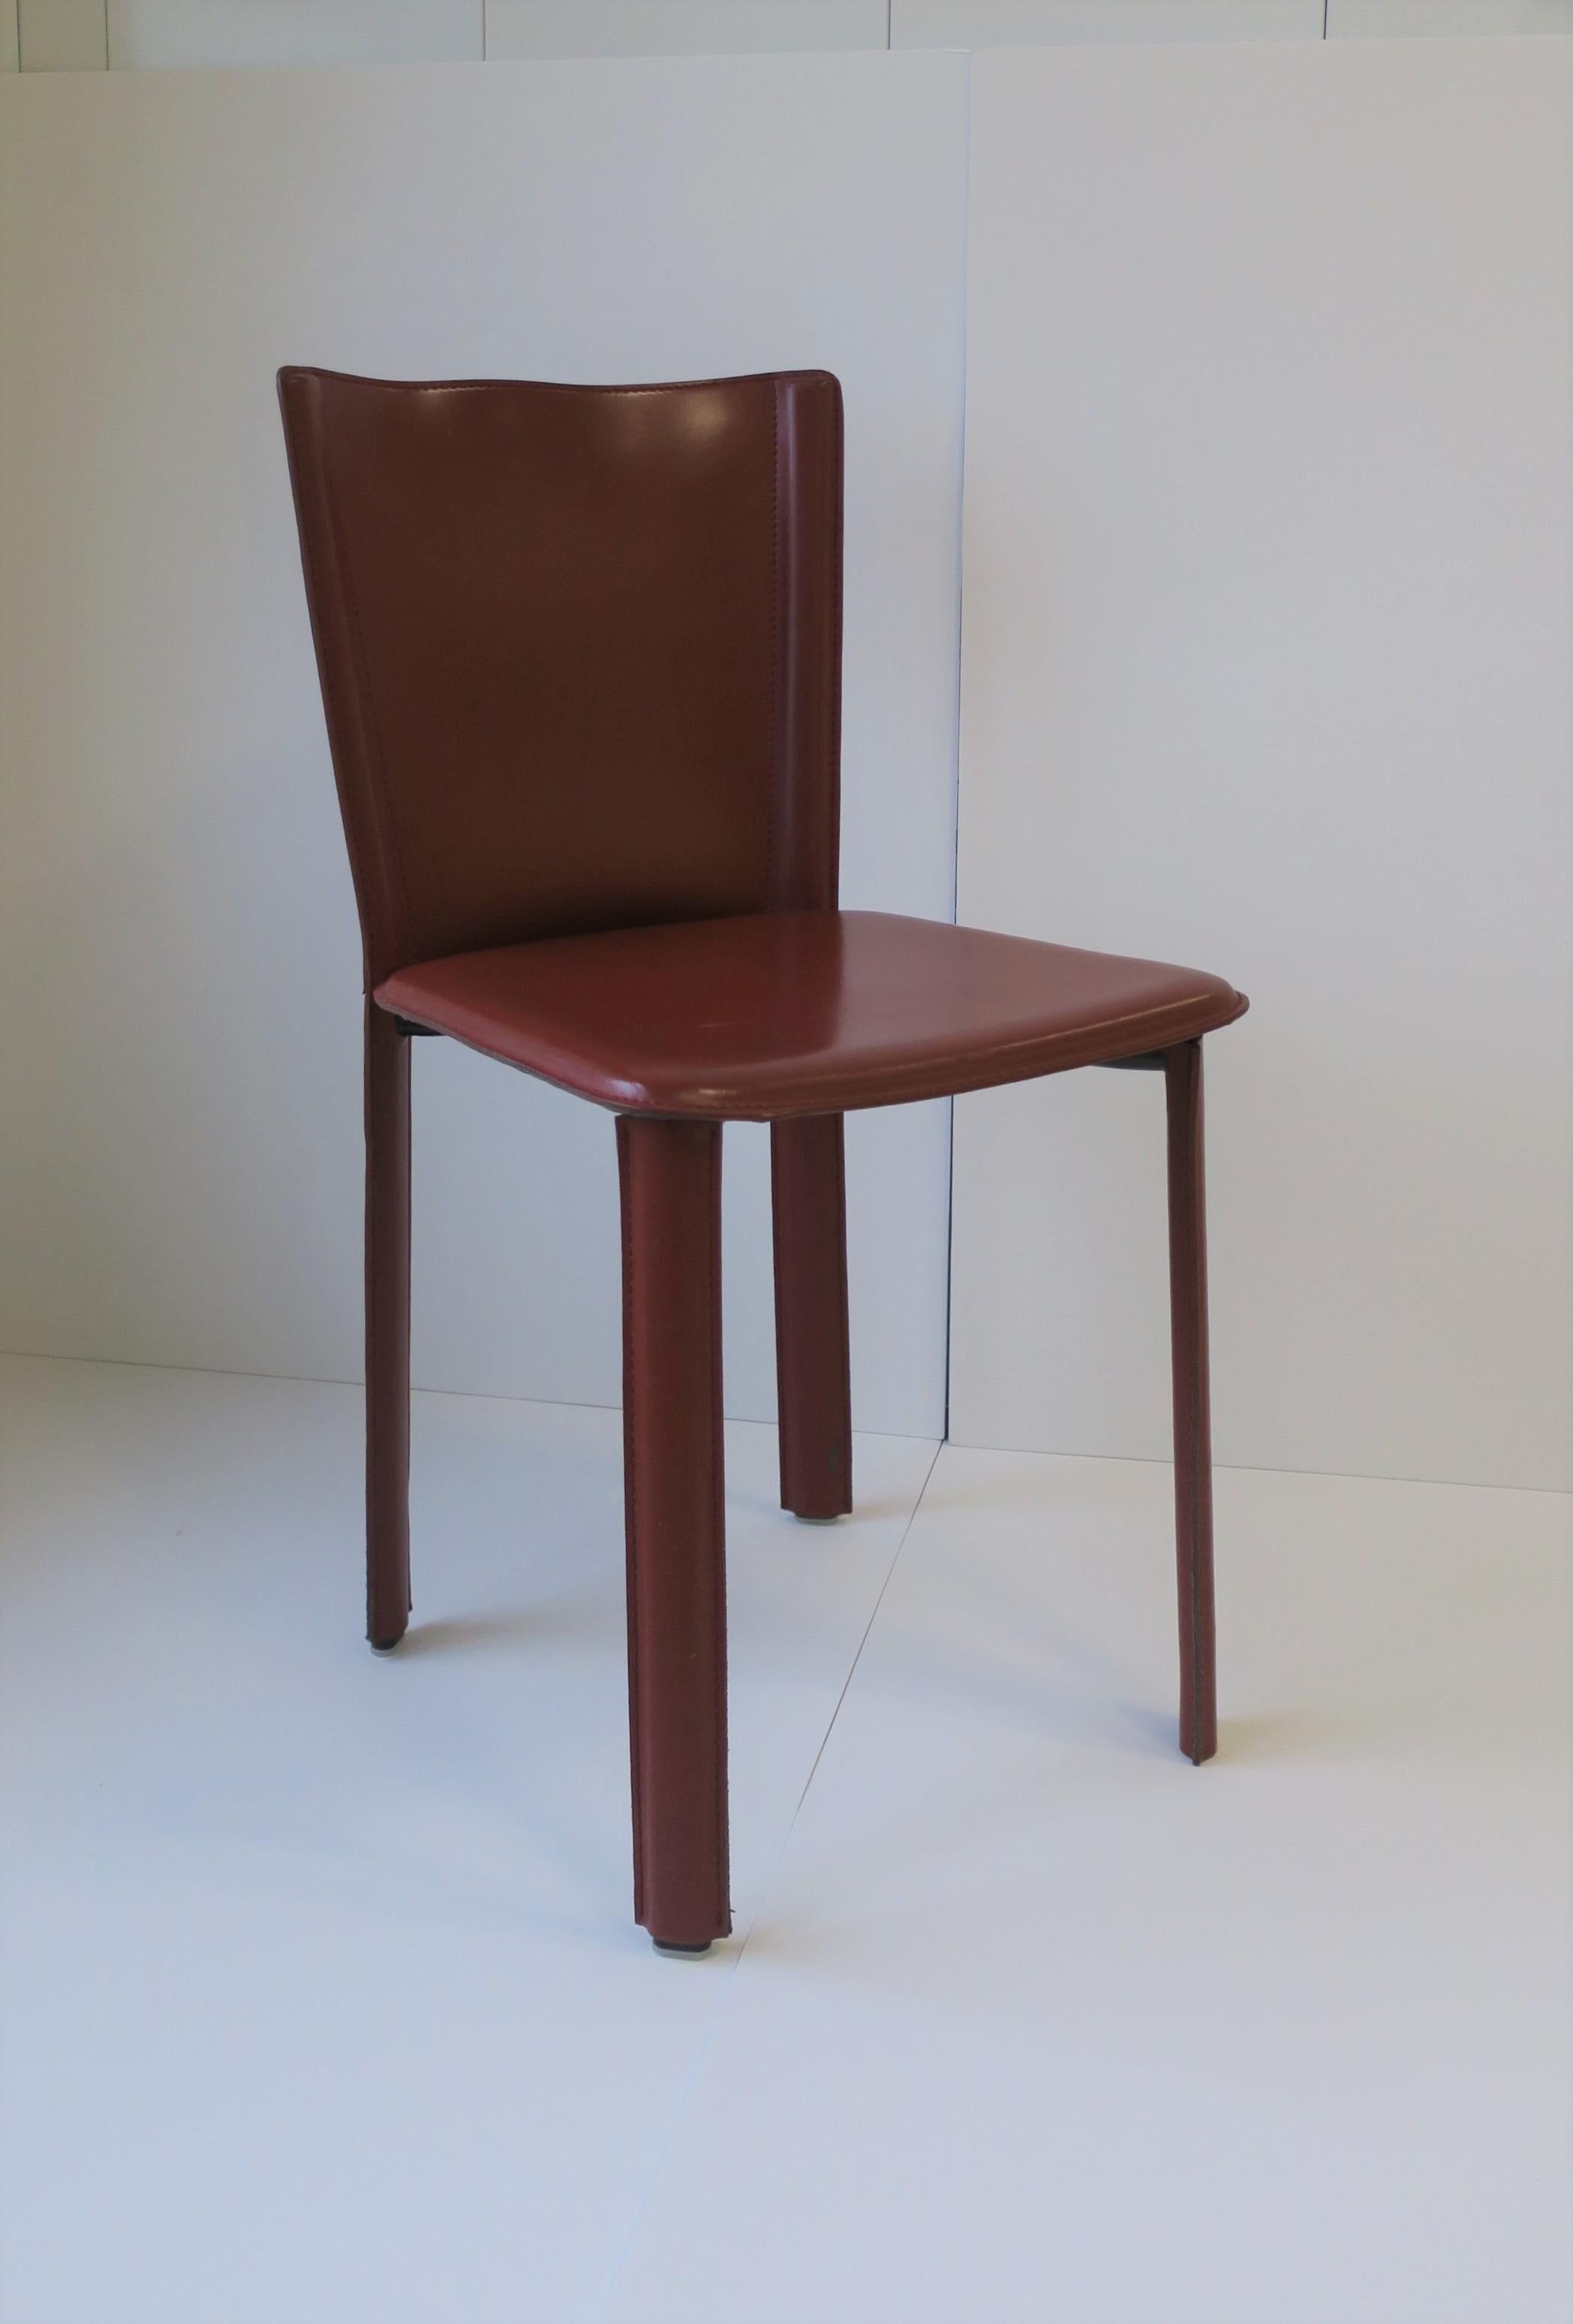 Designer Italian Red Burgundy Leather Side or Desk Chair by Frag 4